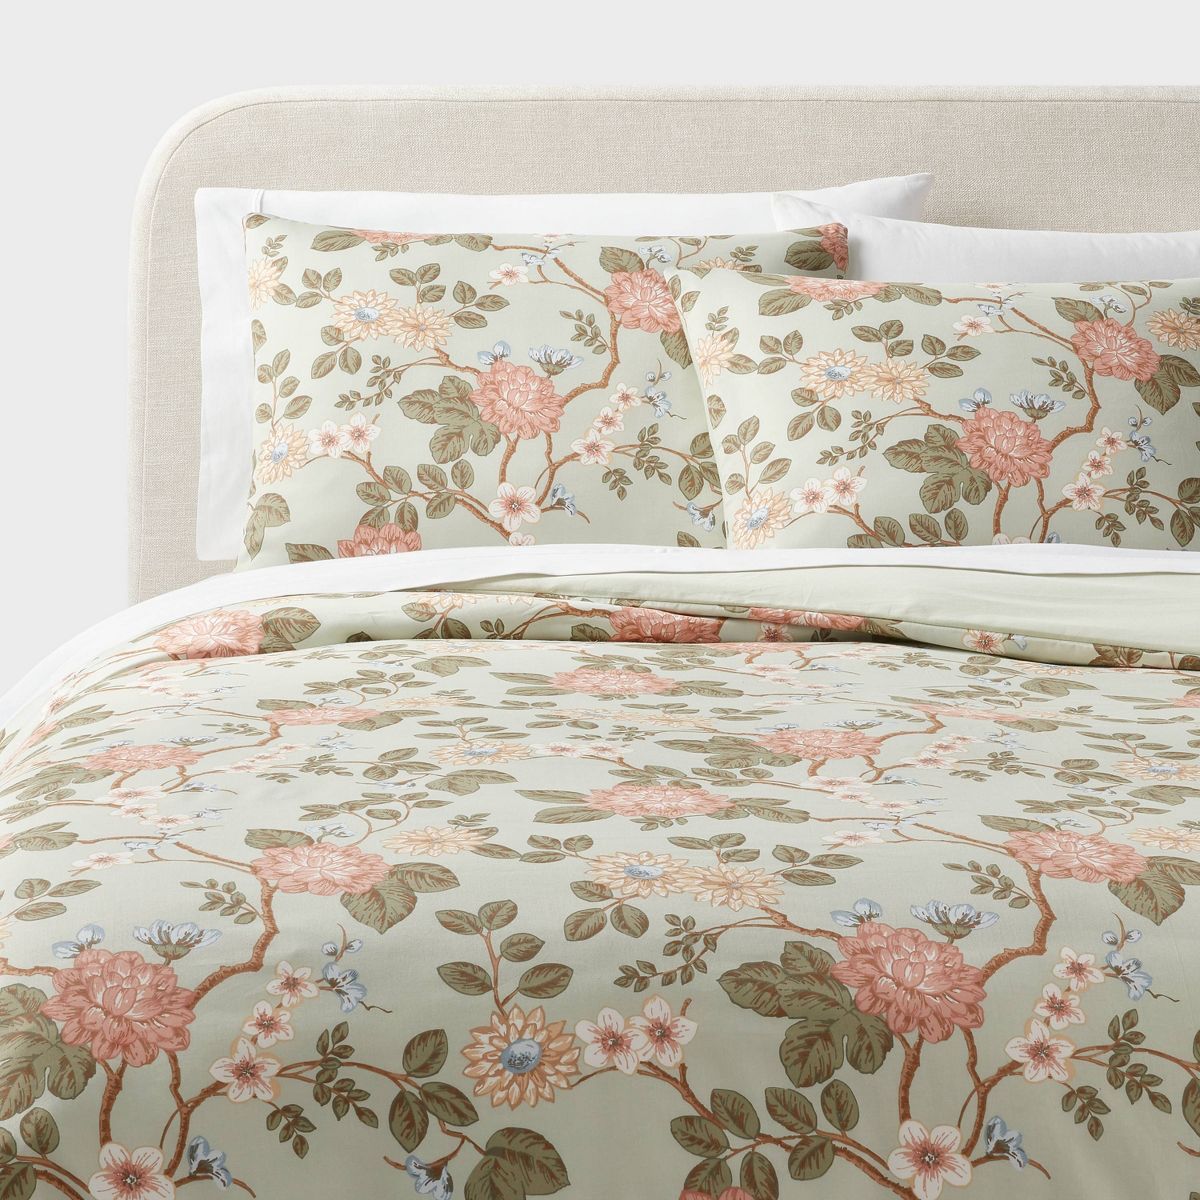 Trad Floral Print Duvet and Sham Set Light Sage Green/Light Pink/White - Threshold™ | Target